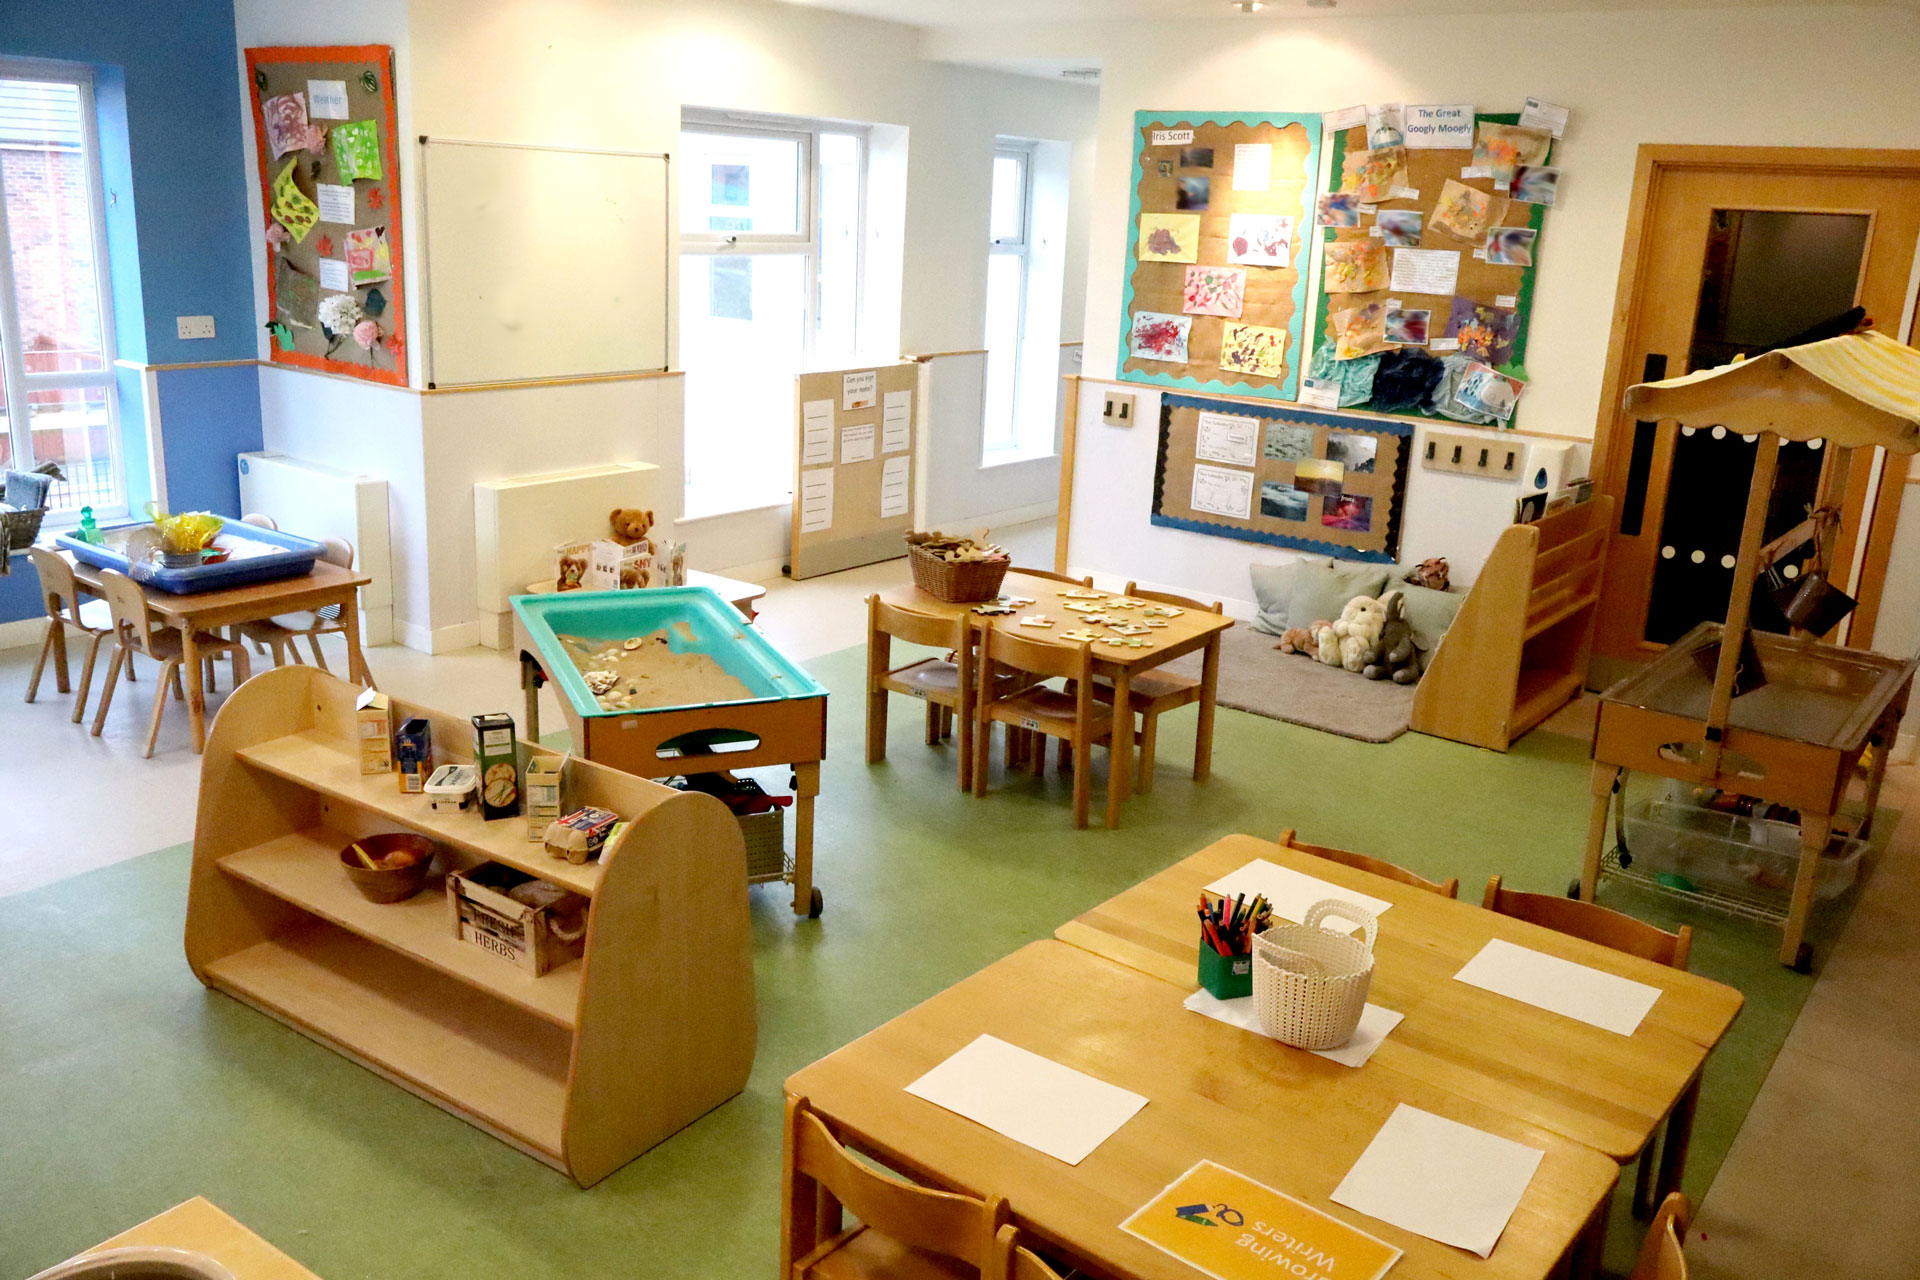 Timperley Day Nursery and Preschool preschool room